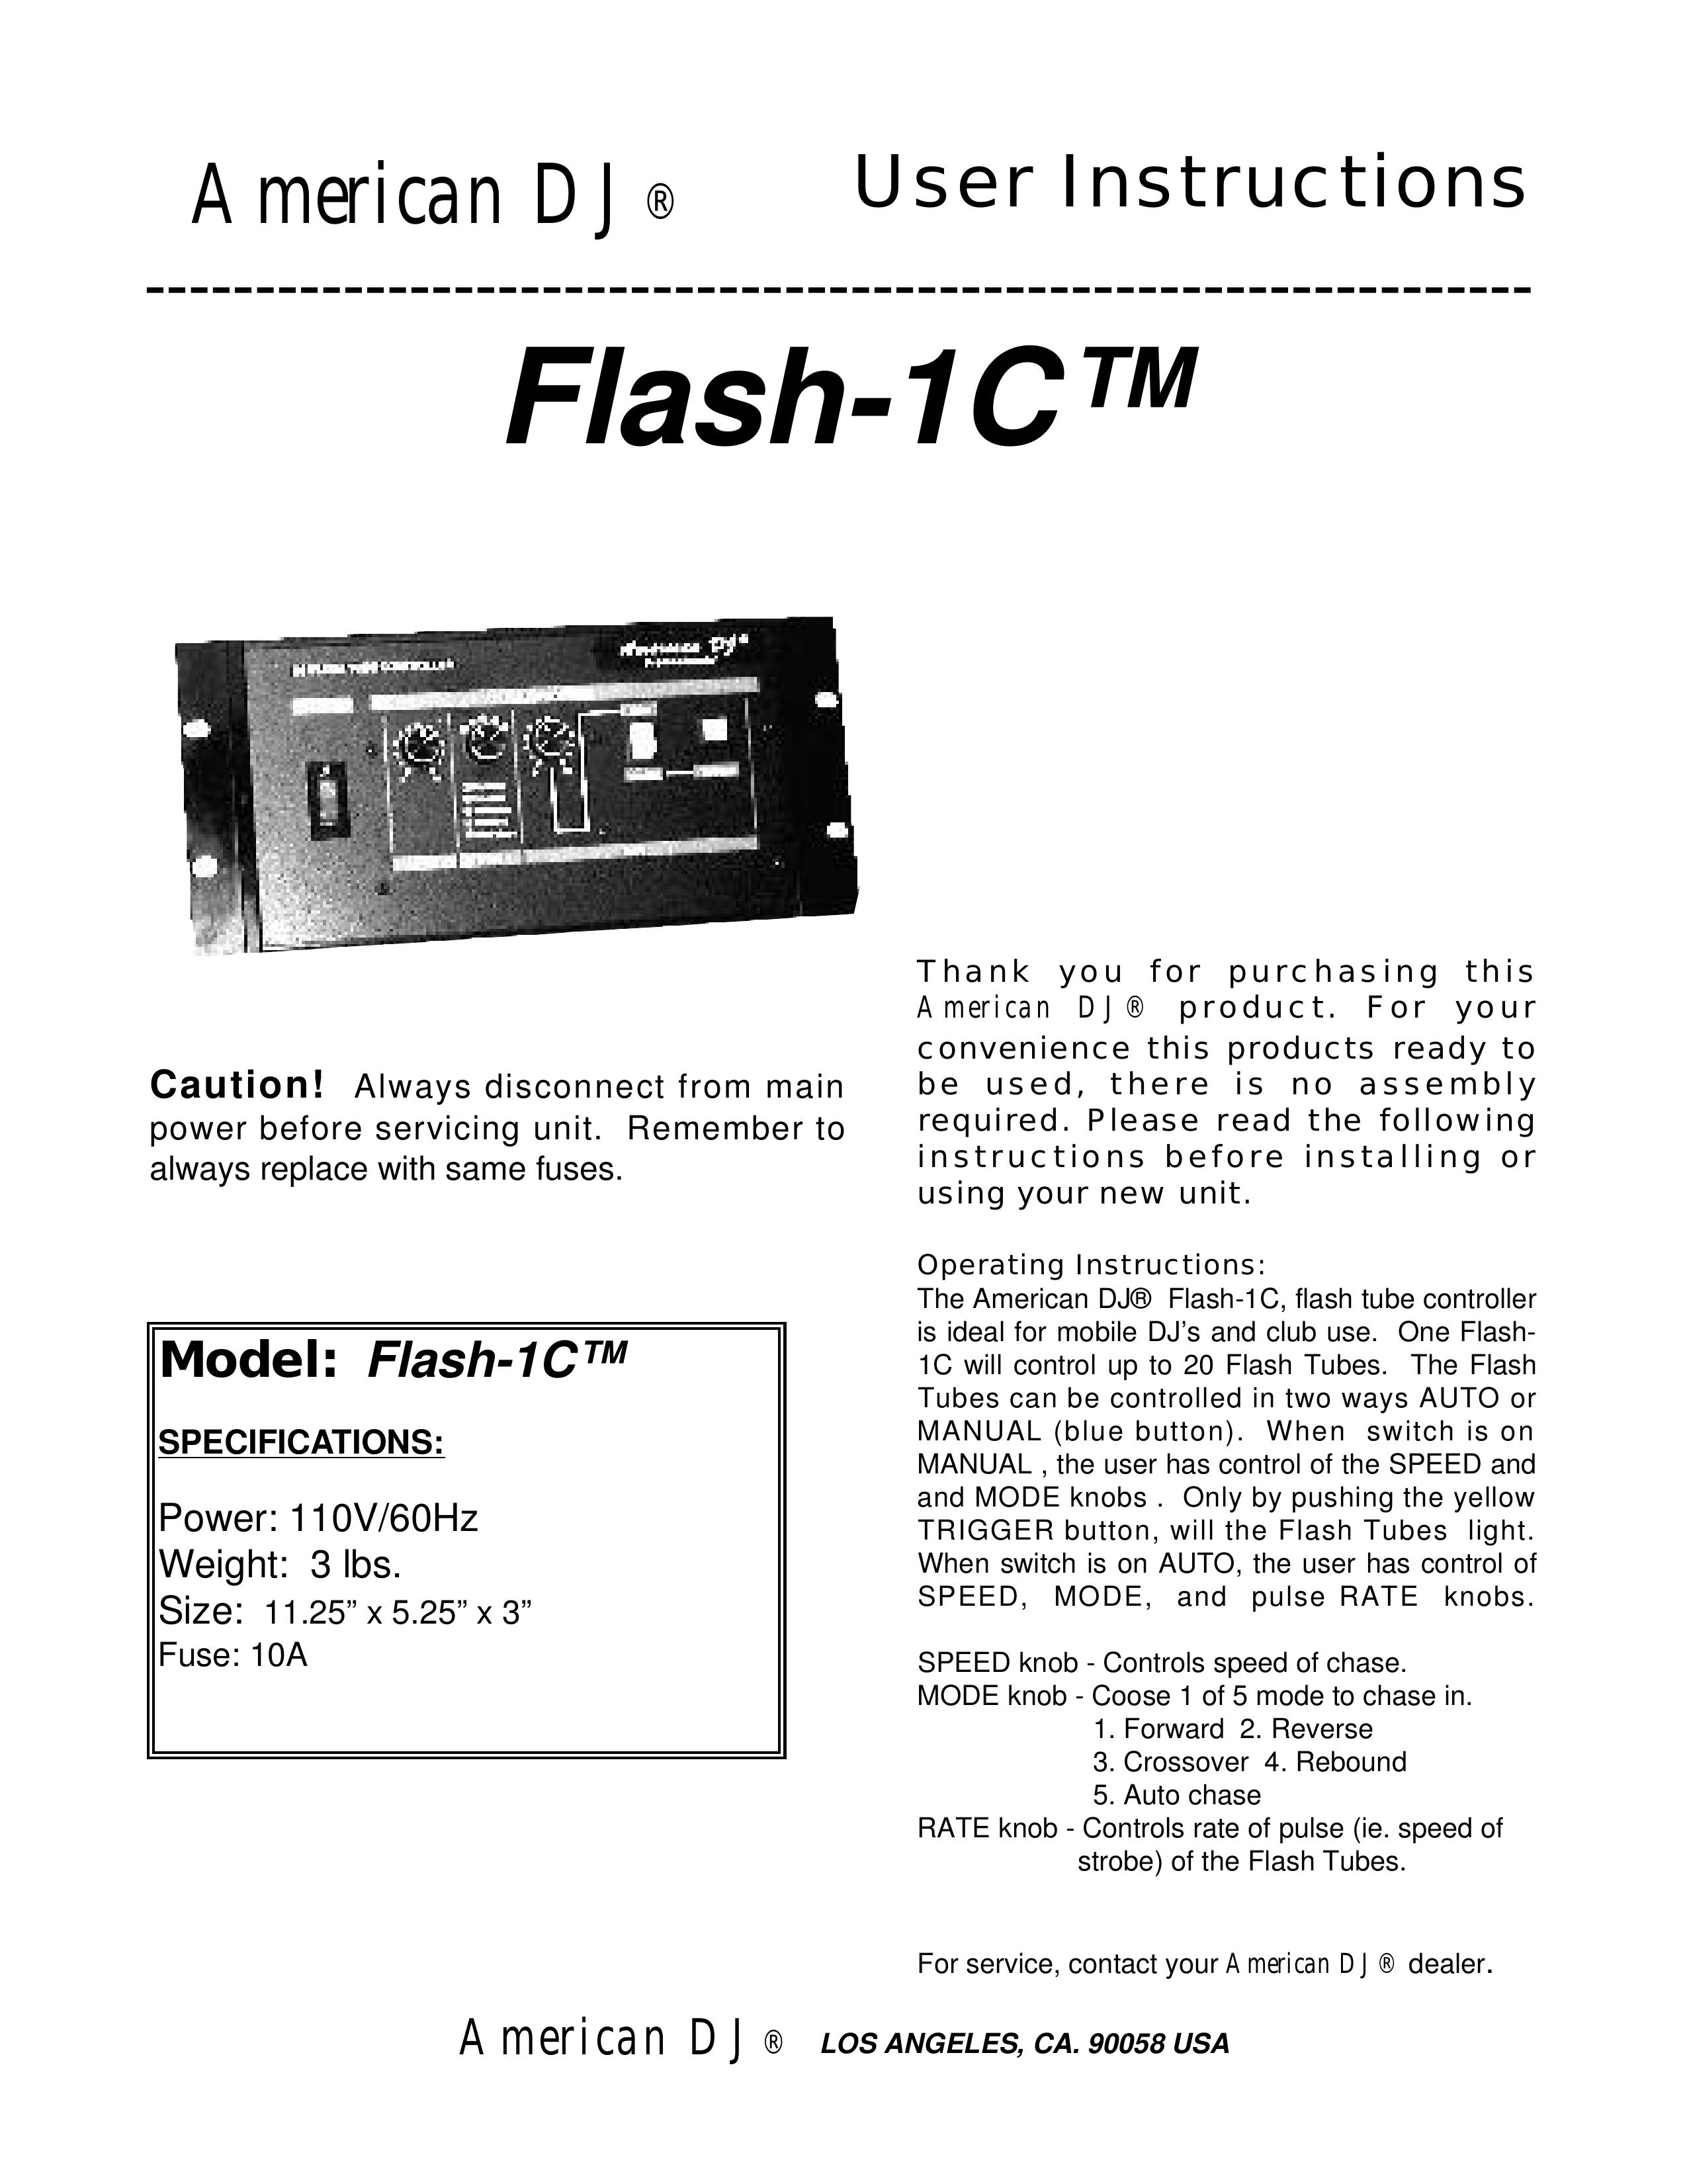 American DJ Flash-1CTM DJ Equipment User Manual (Page 1)